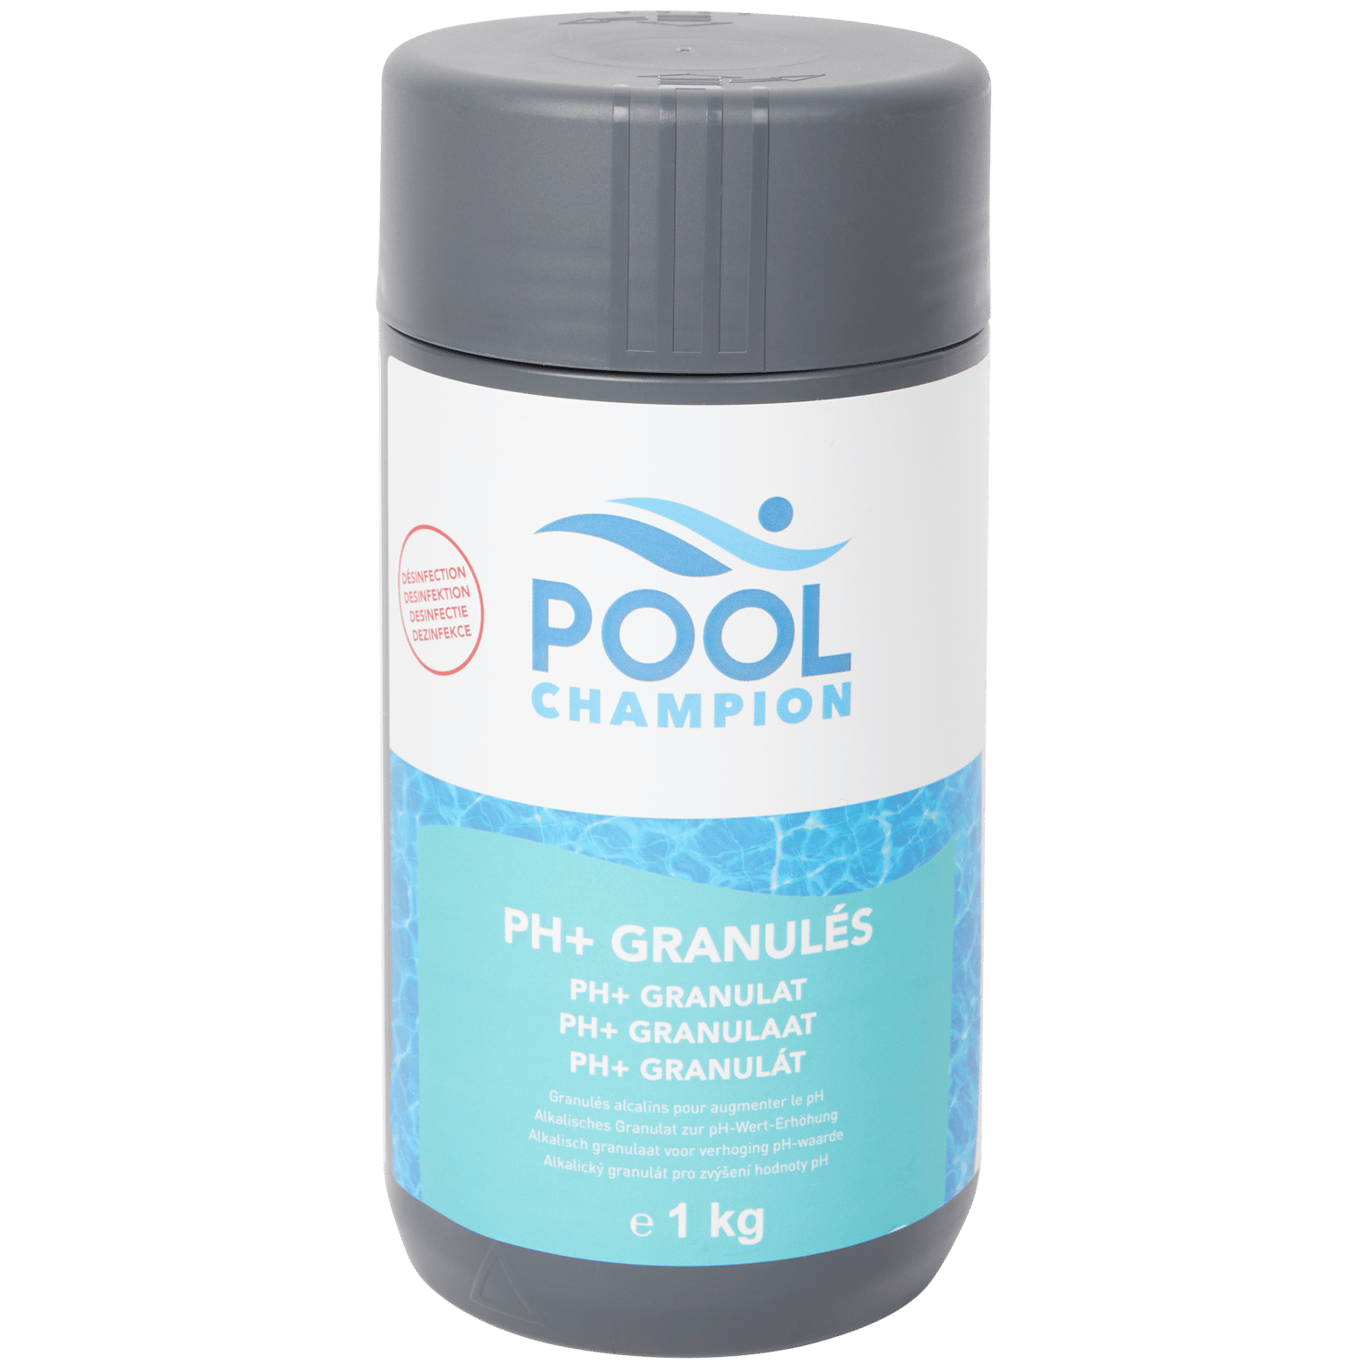 Pool Champion pH+ Granulat